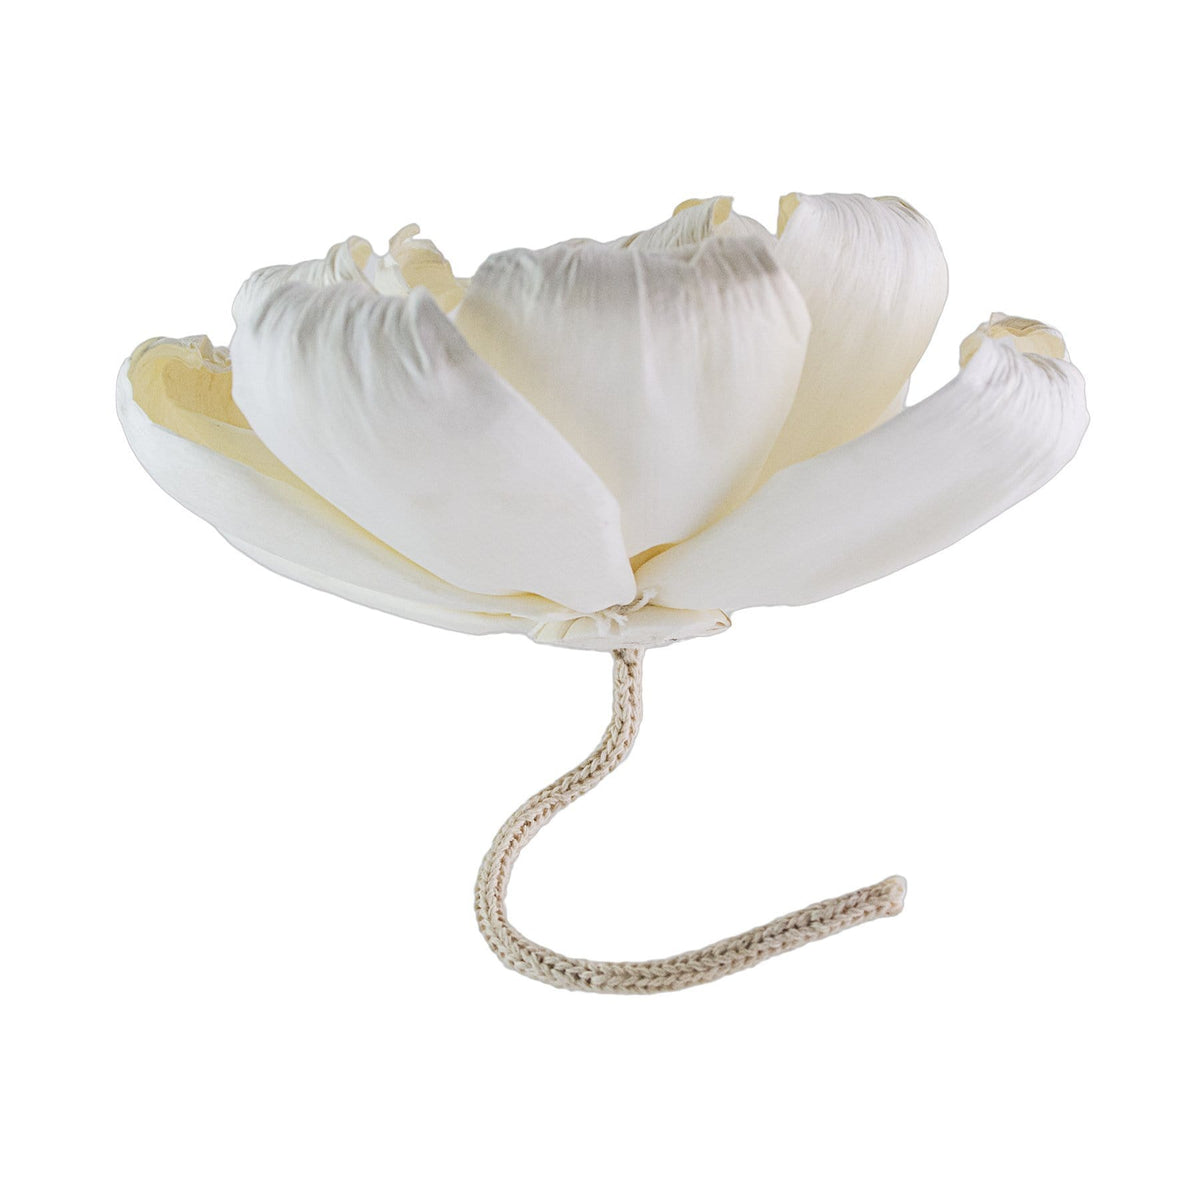 HYSSES Home Scents 5&quot; Solar Flower Diffuser Refill - Magnolia